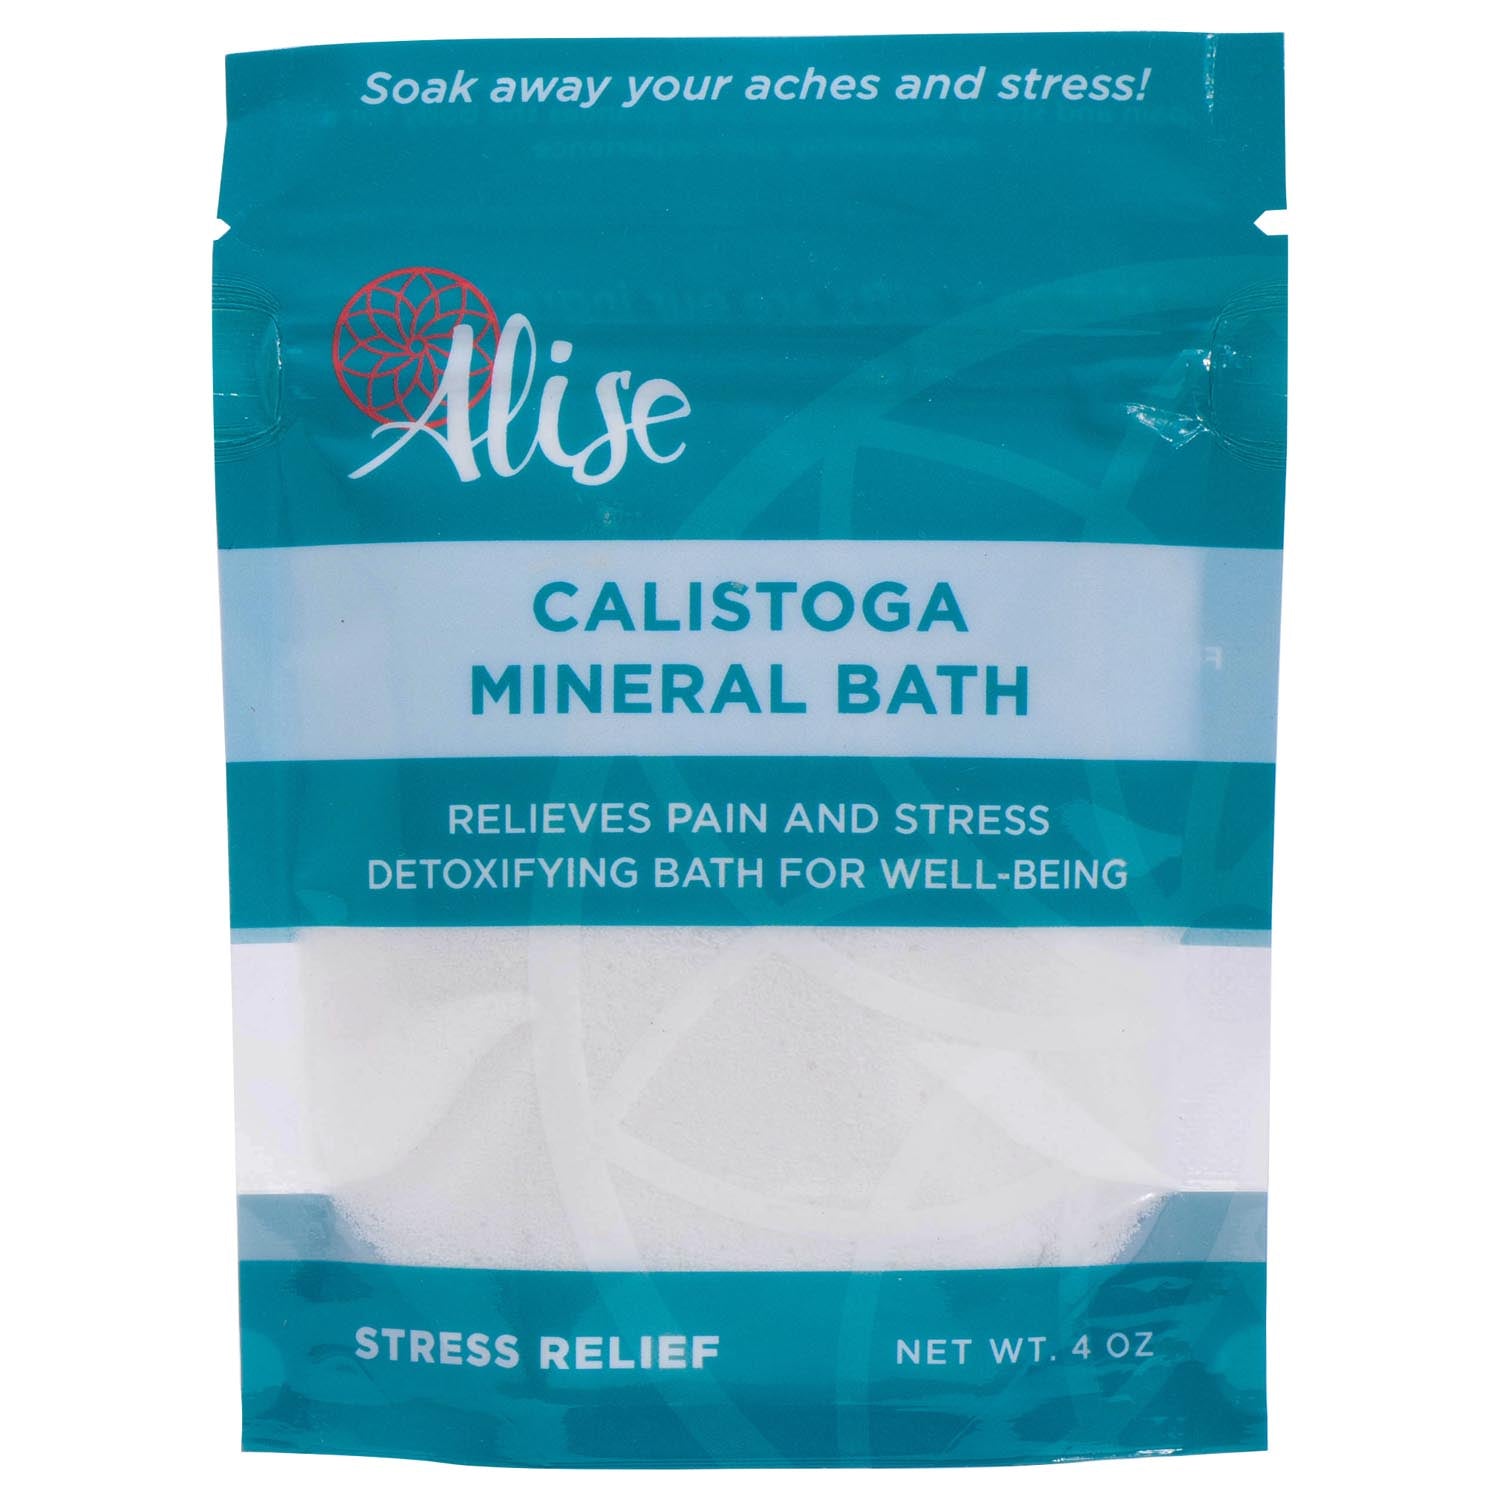 Calistoga Mineral Bath Stress Relief Blend 4oz Alise Body Care